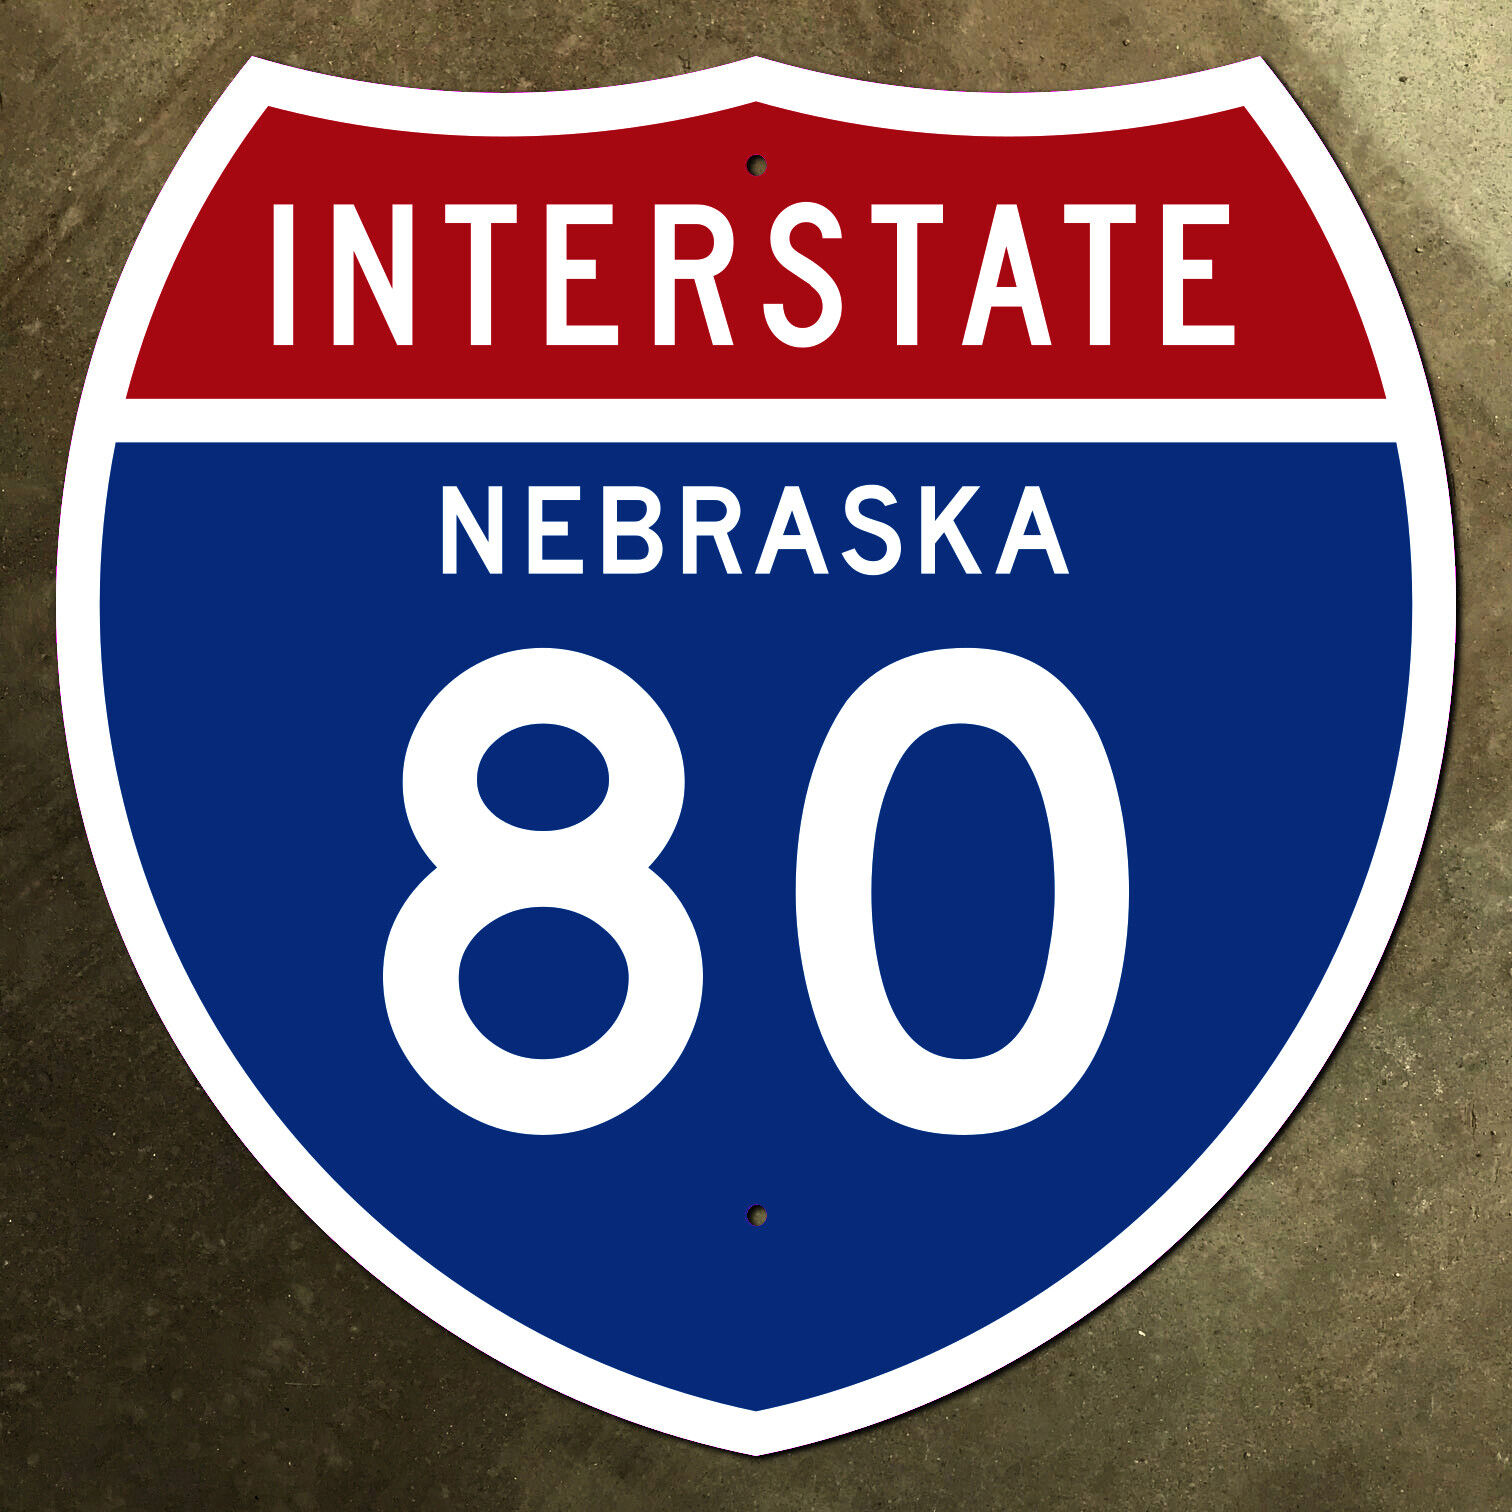 Nebraska interstate route 80 highway marker road sign Omaha Lincoln 18x18